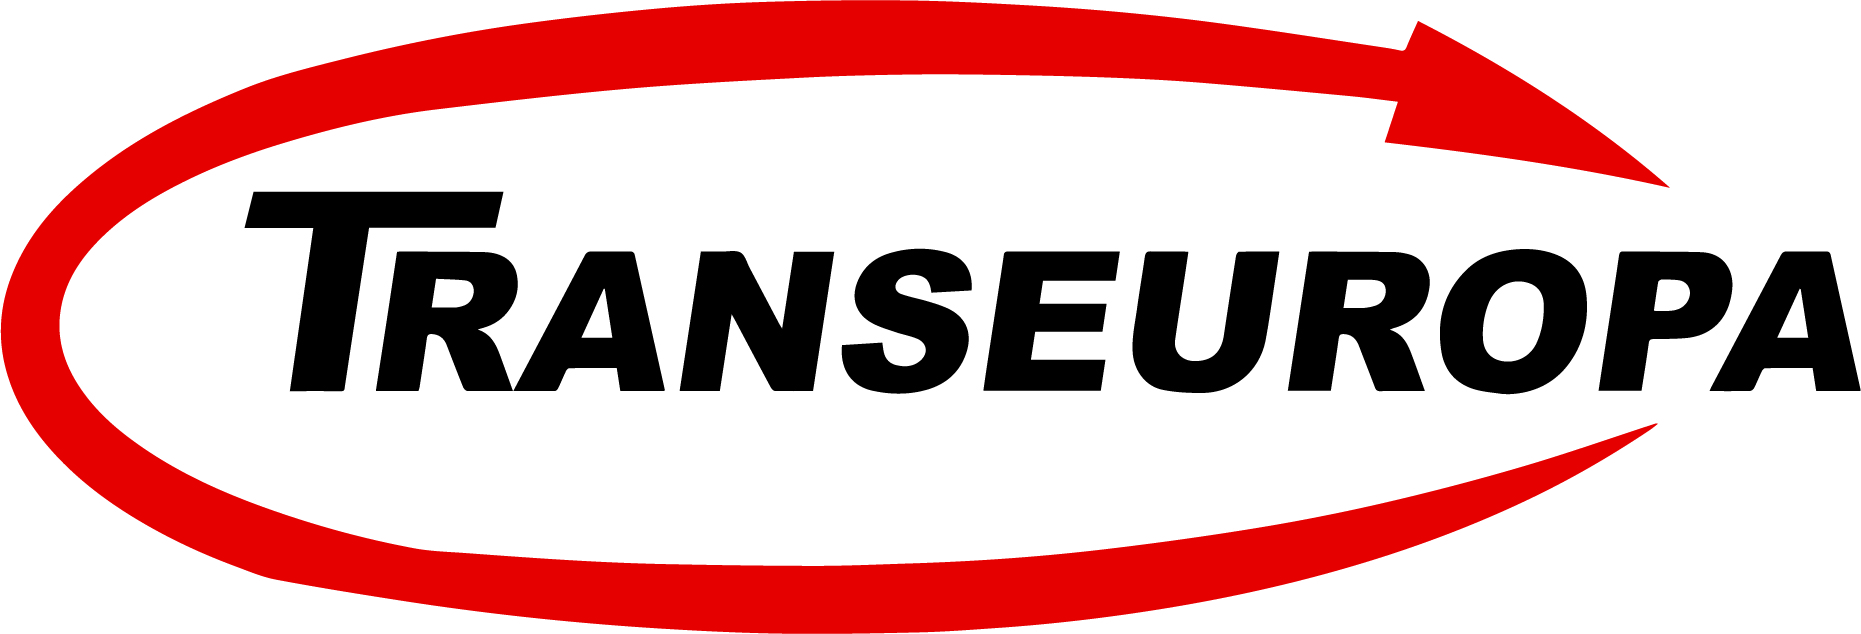 transeuropa_logo.jpg